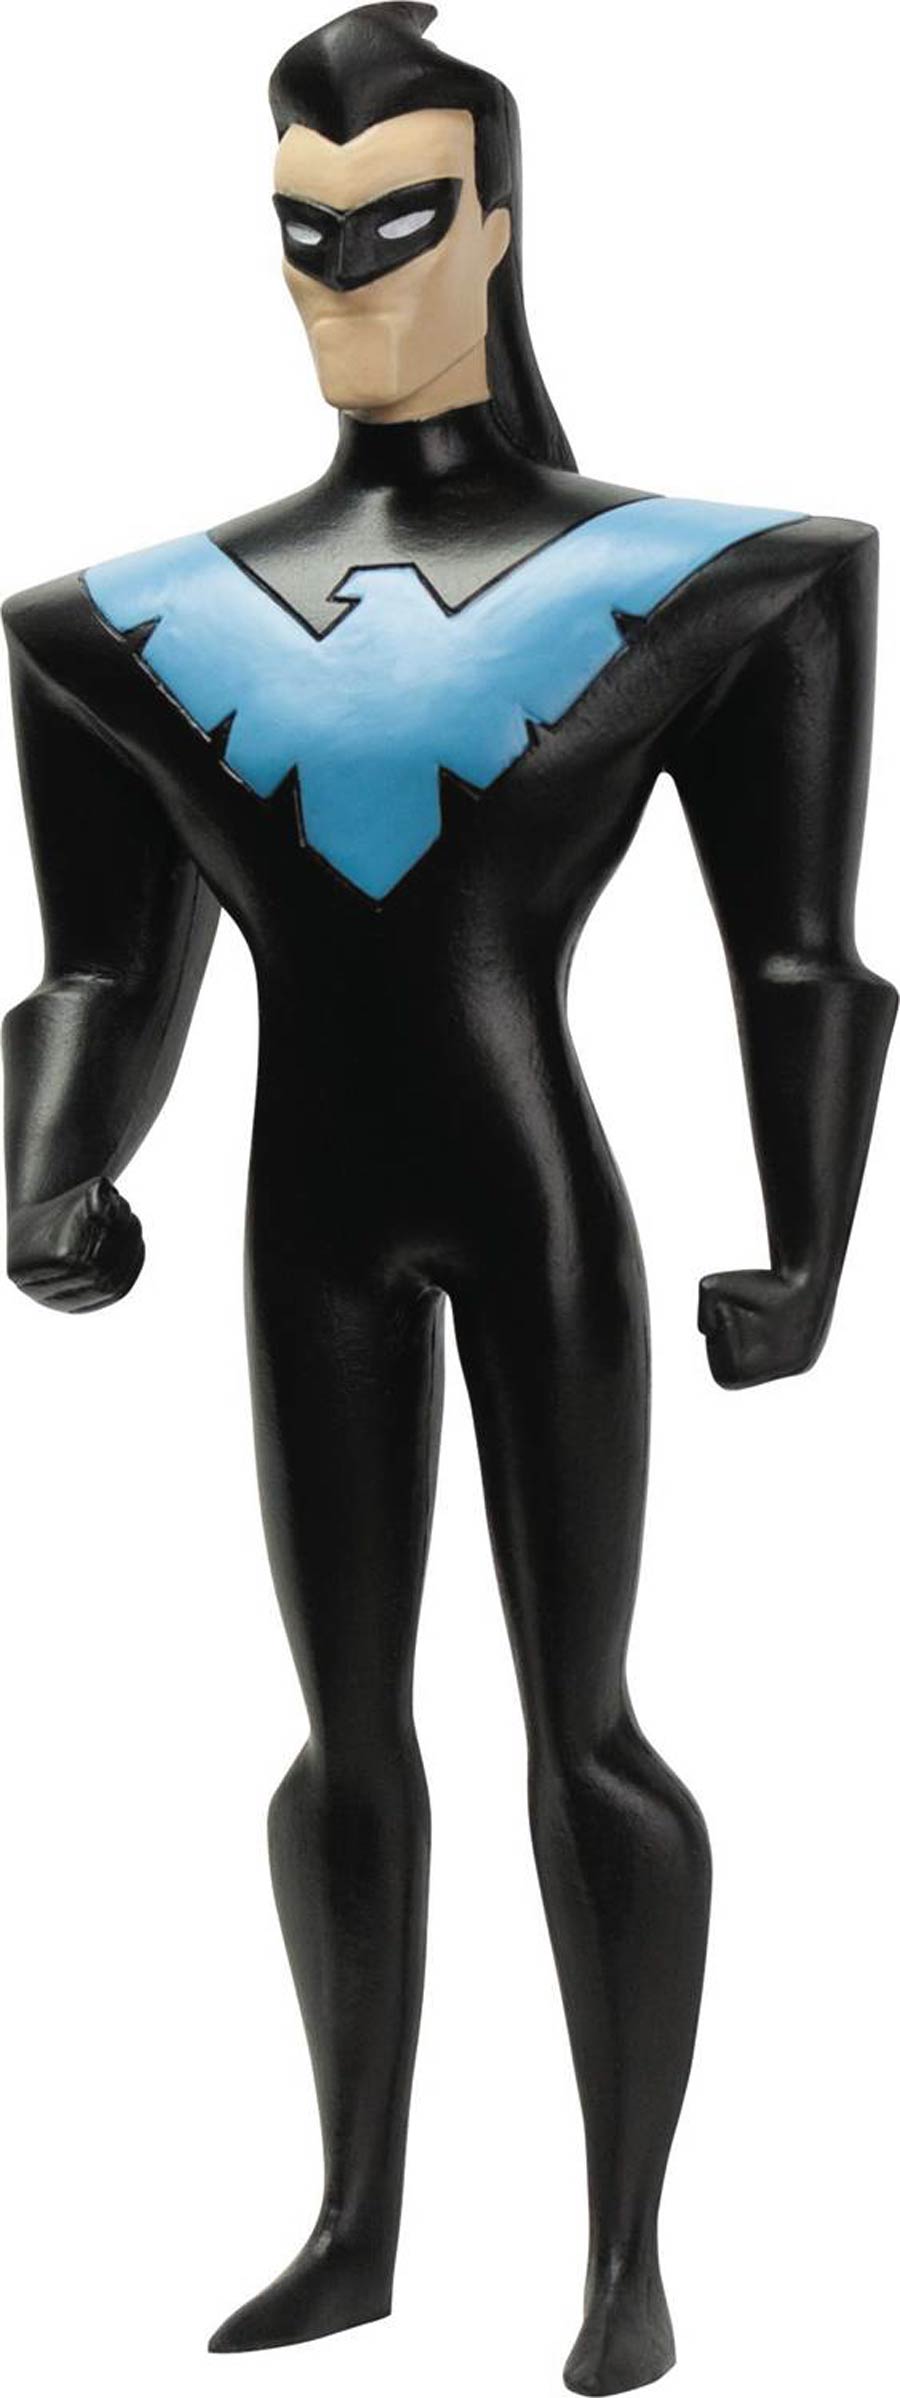 New Batman Adventures Bendable Figure - Nightwing